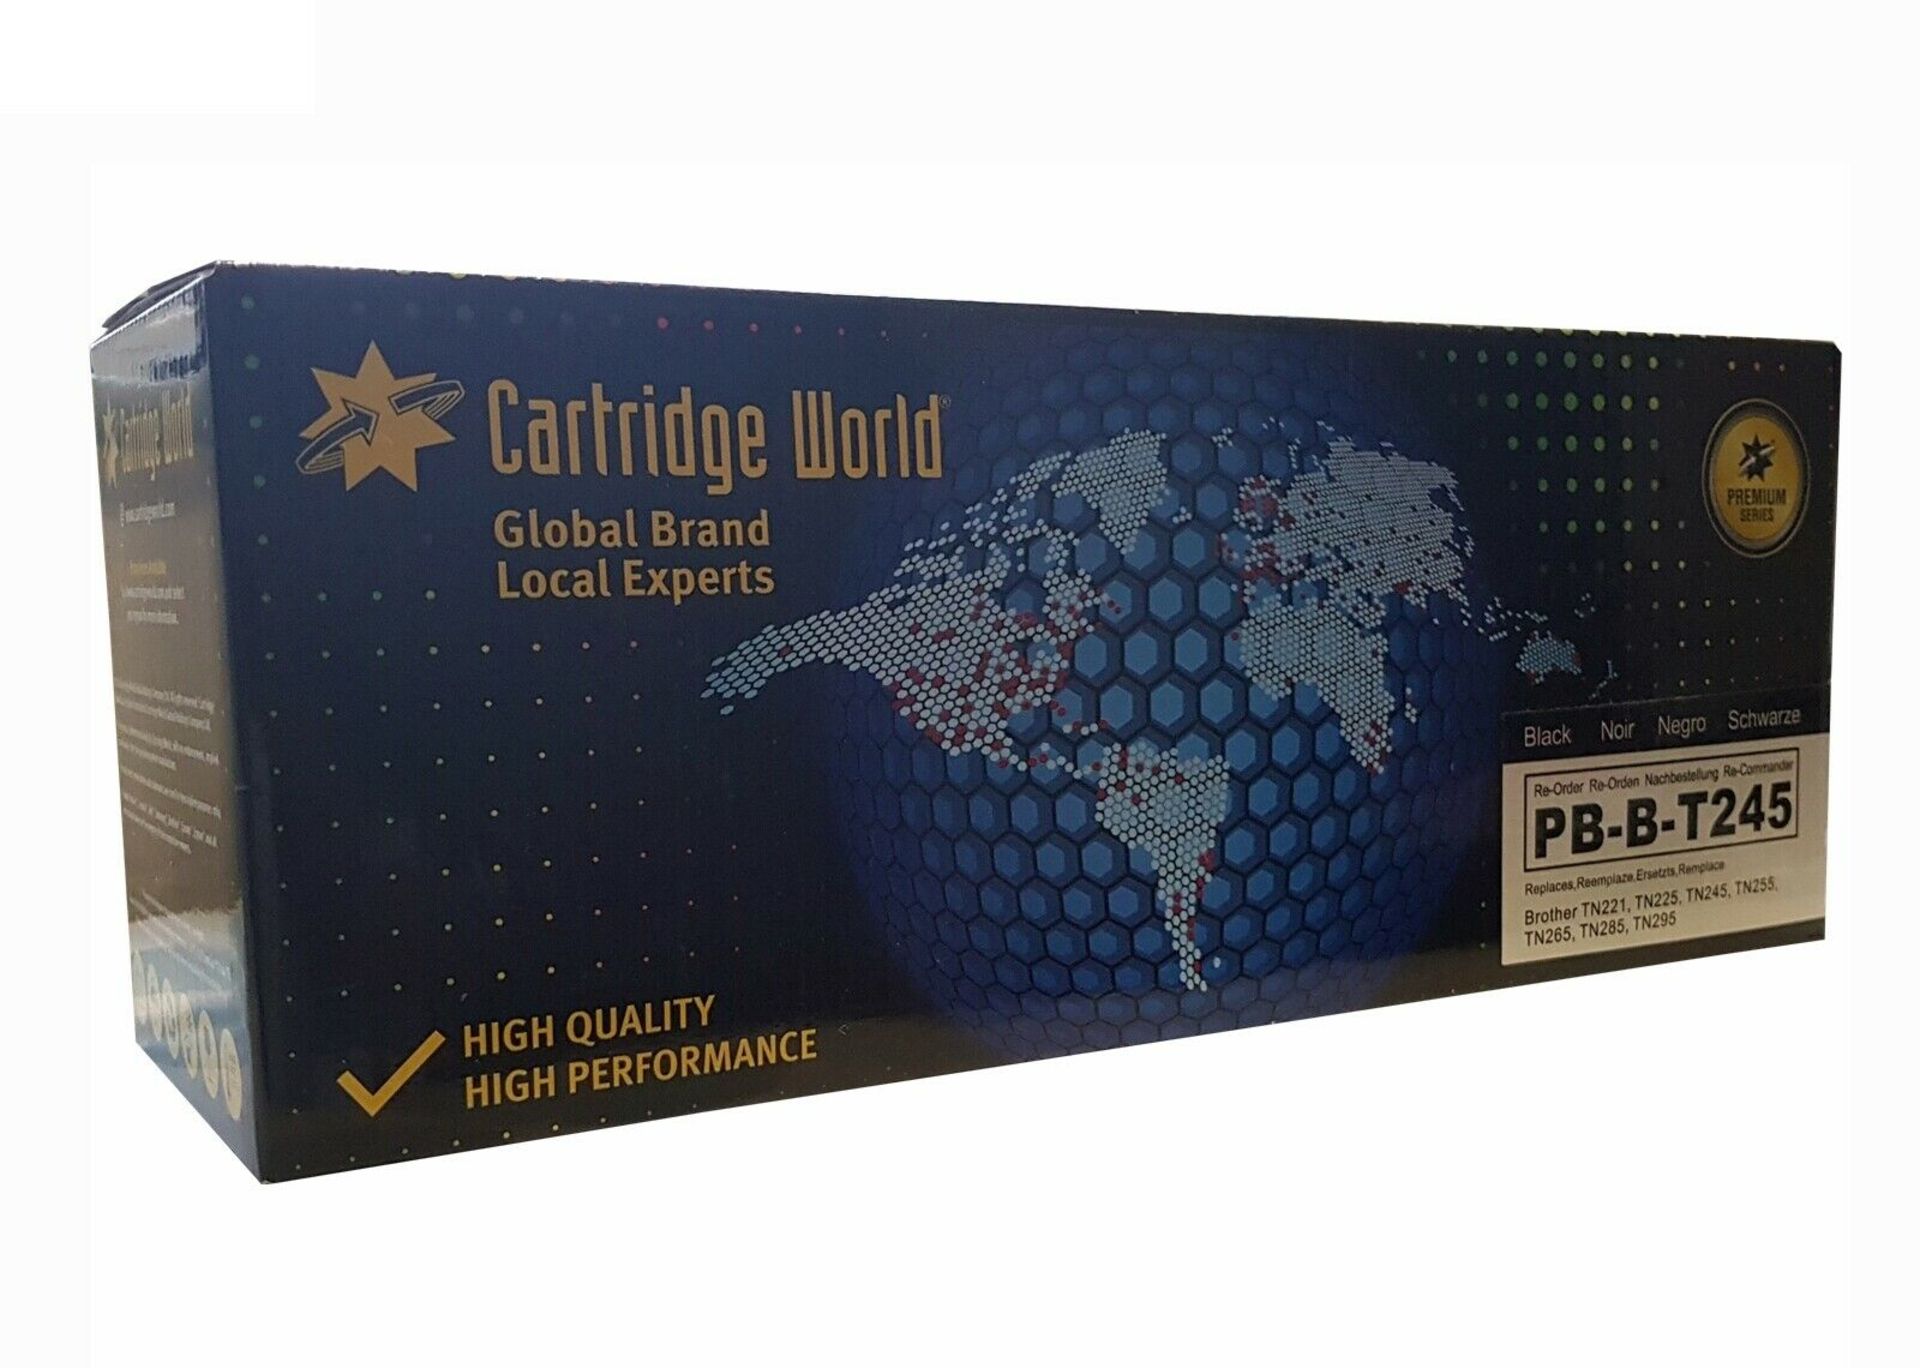 Cartridge world toners and ink cartridges bulk joblot rrp £1,984.56 - Image 4 of 6